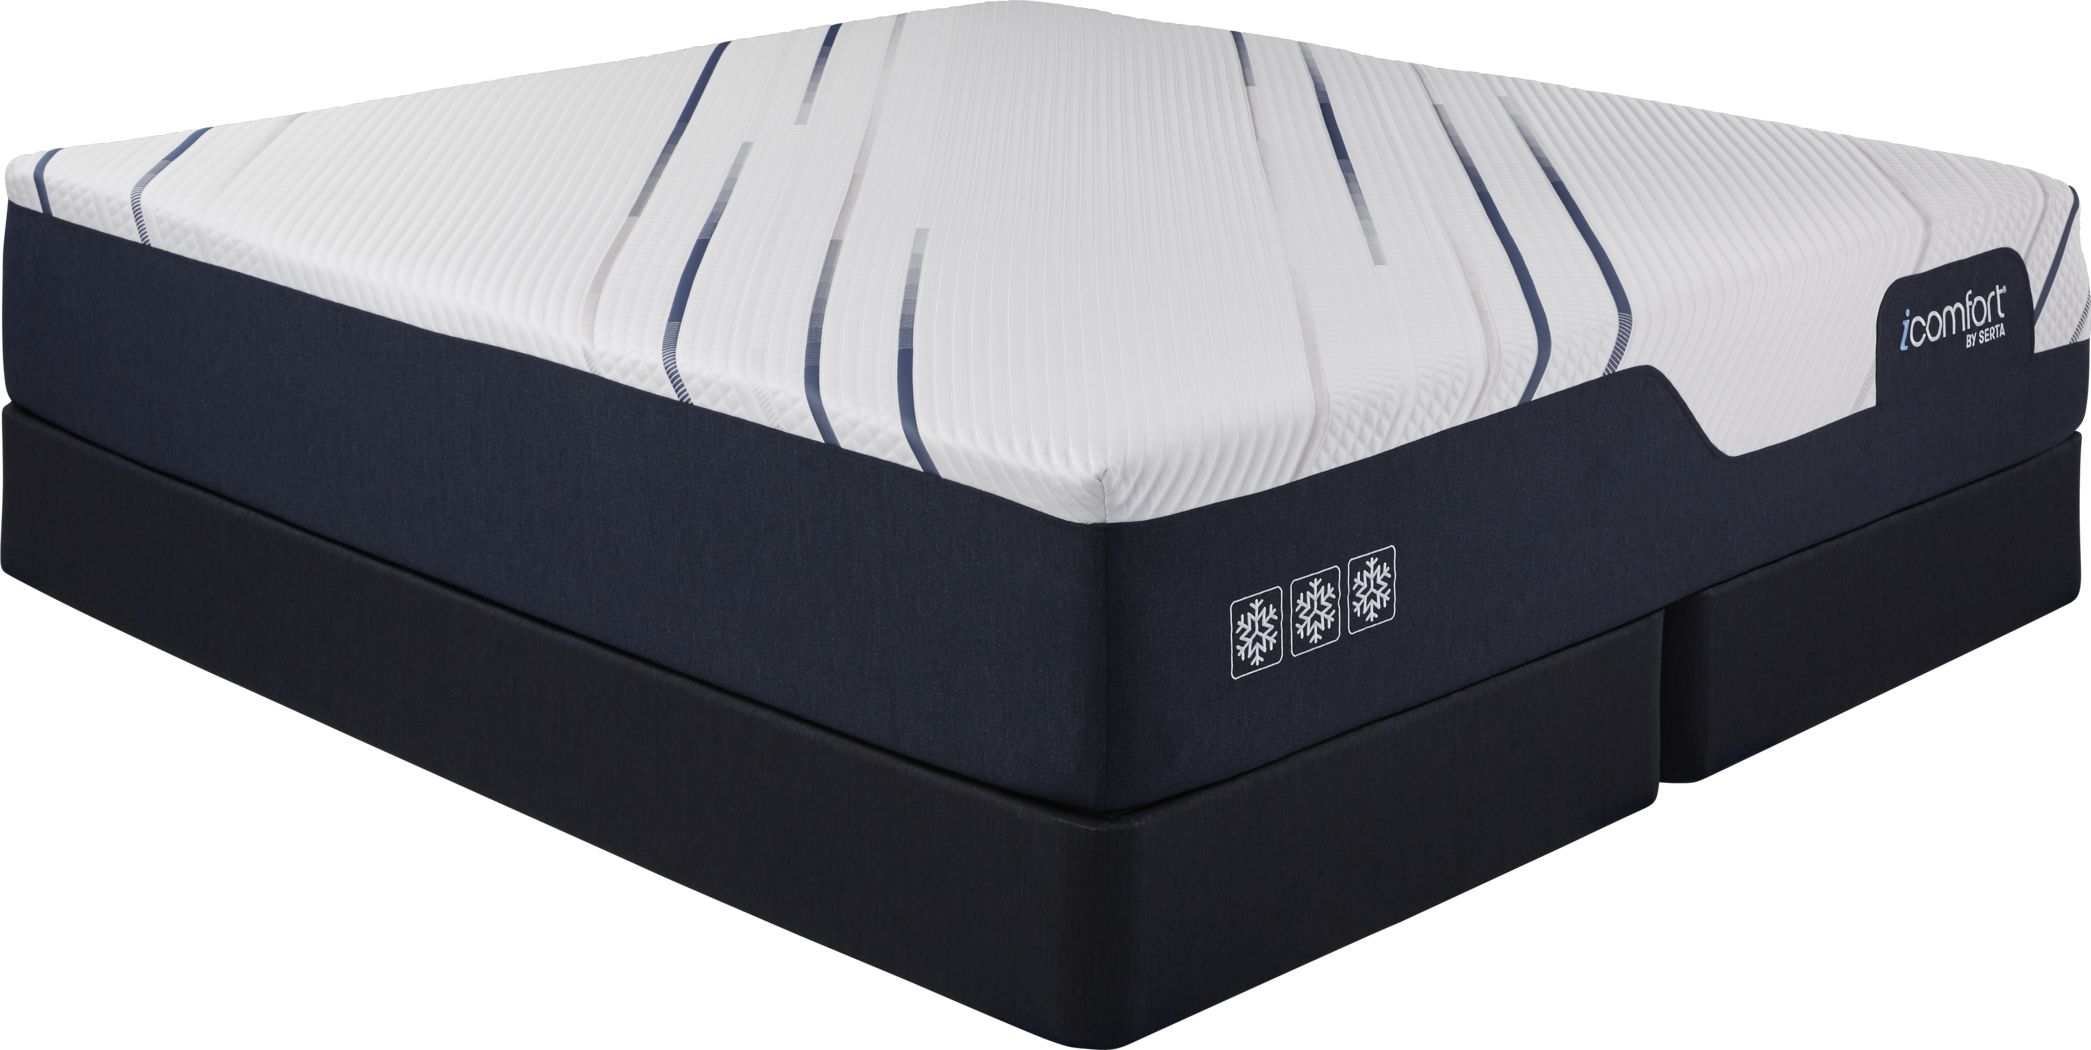 serta icomfort king mattress set